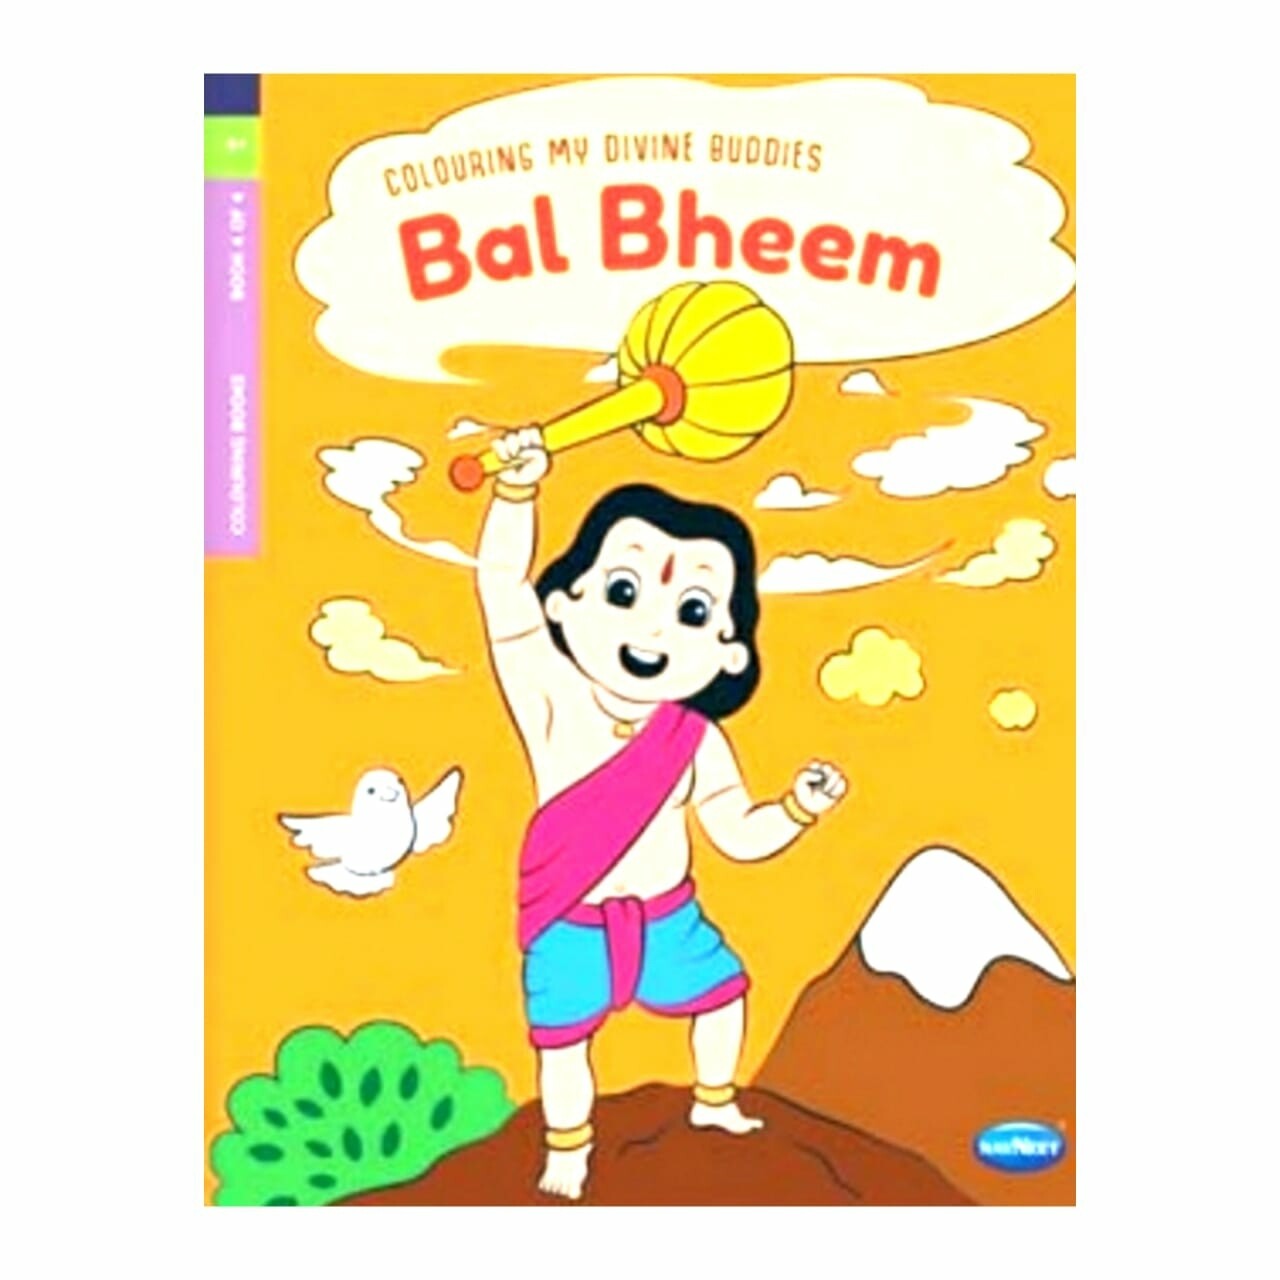 Colouring My Divine Buddies - Bal Bheem & Bal Hanuman